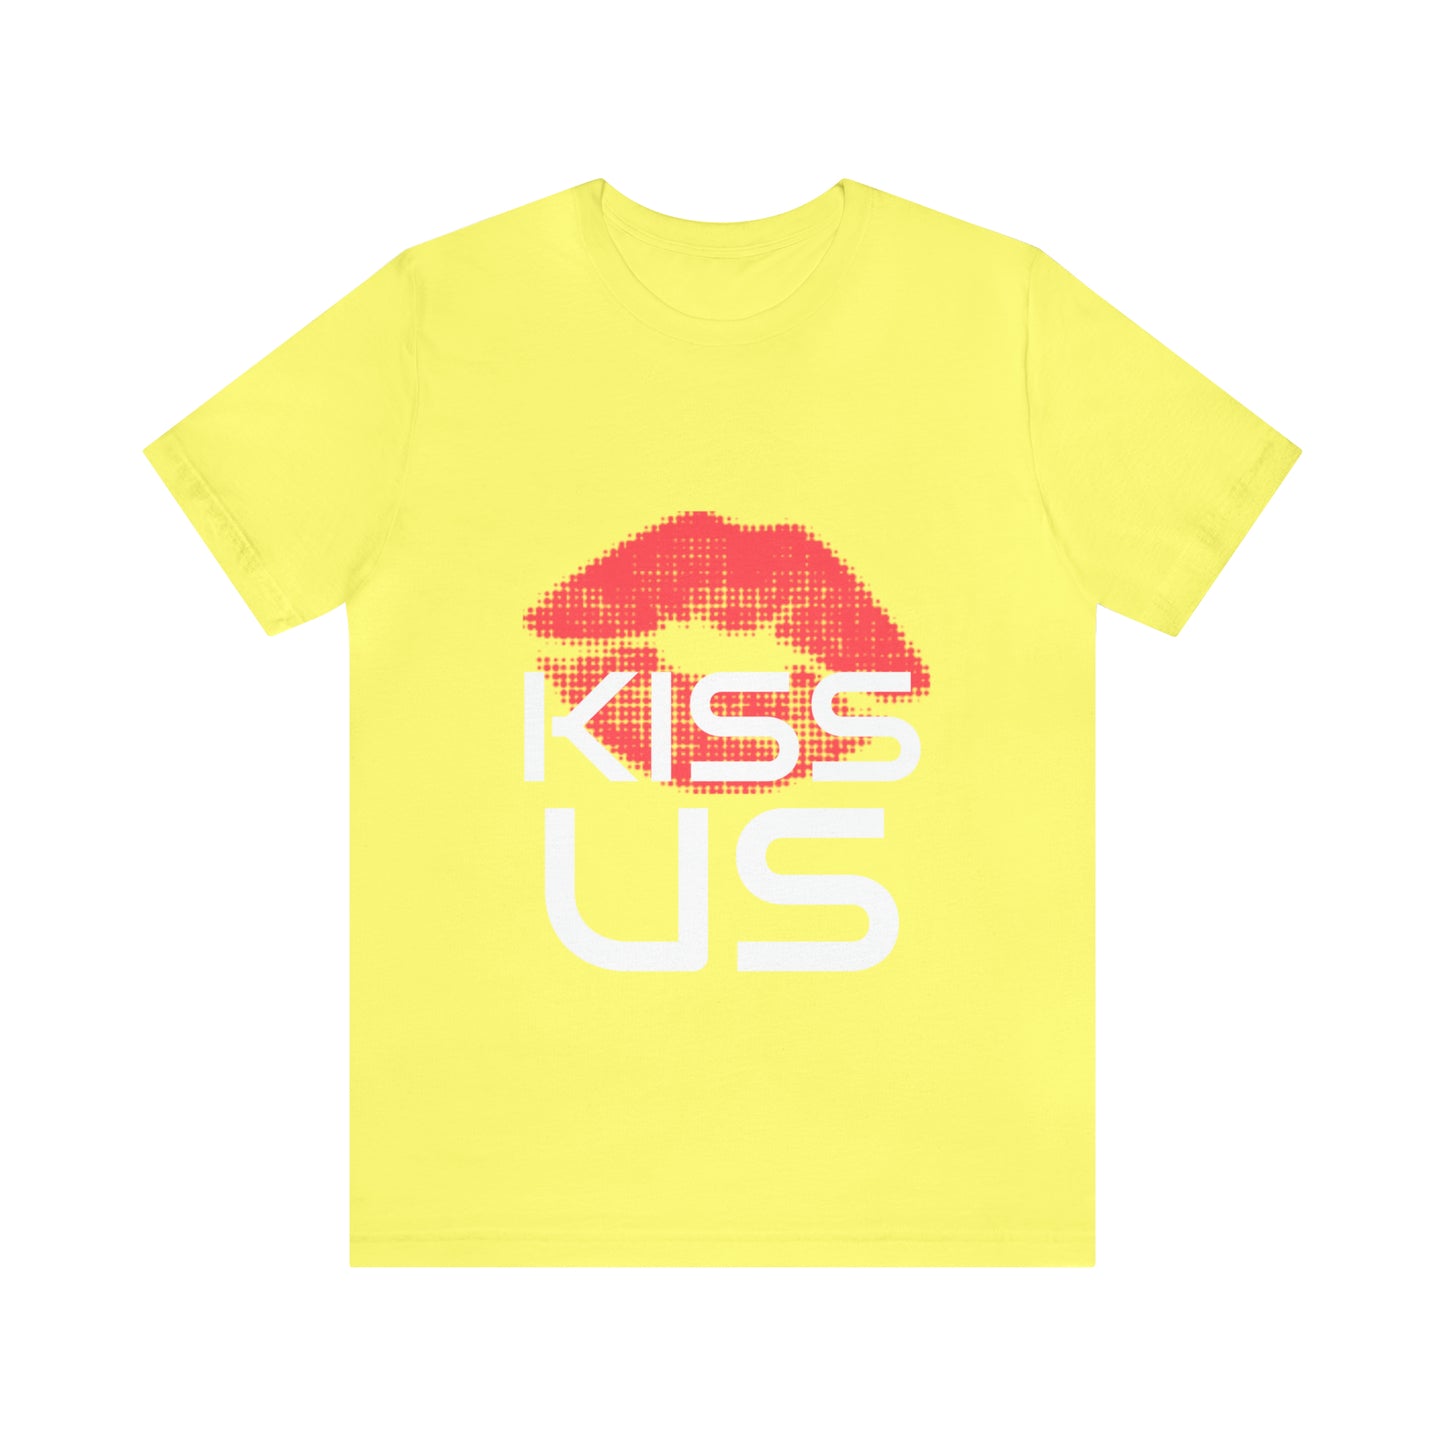 Kiss Us - Unisex T-Shirt